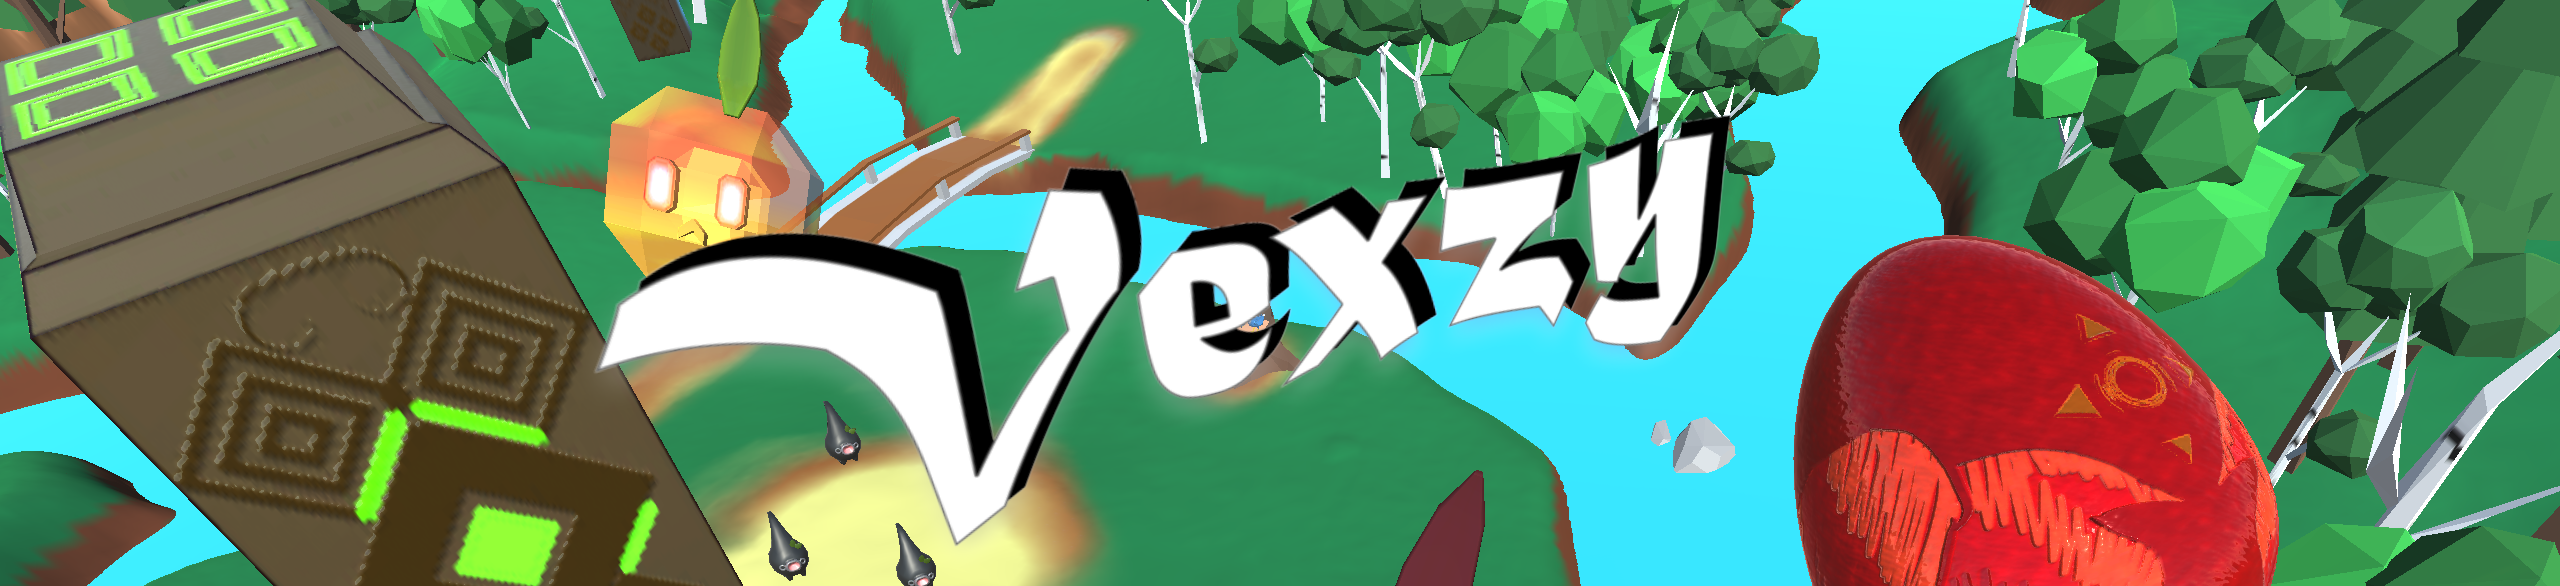 Vexzy - Demo